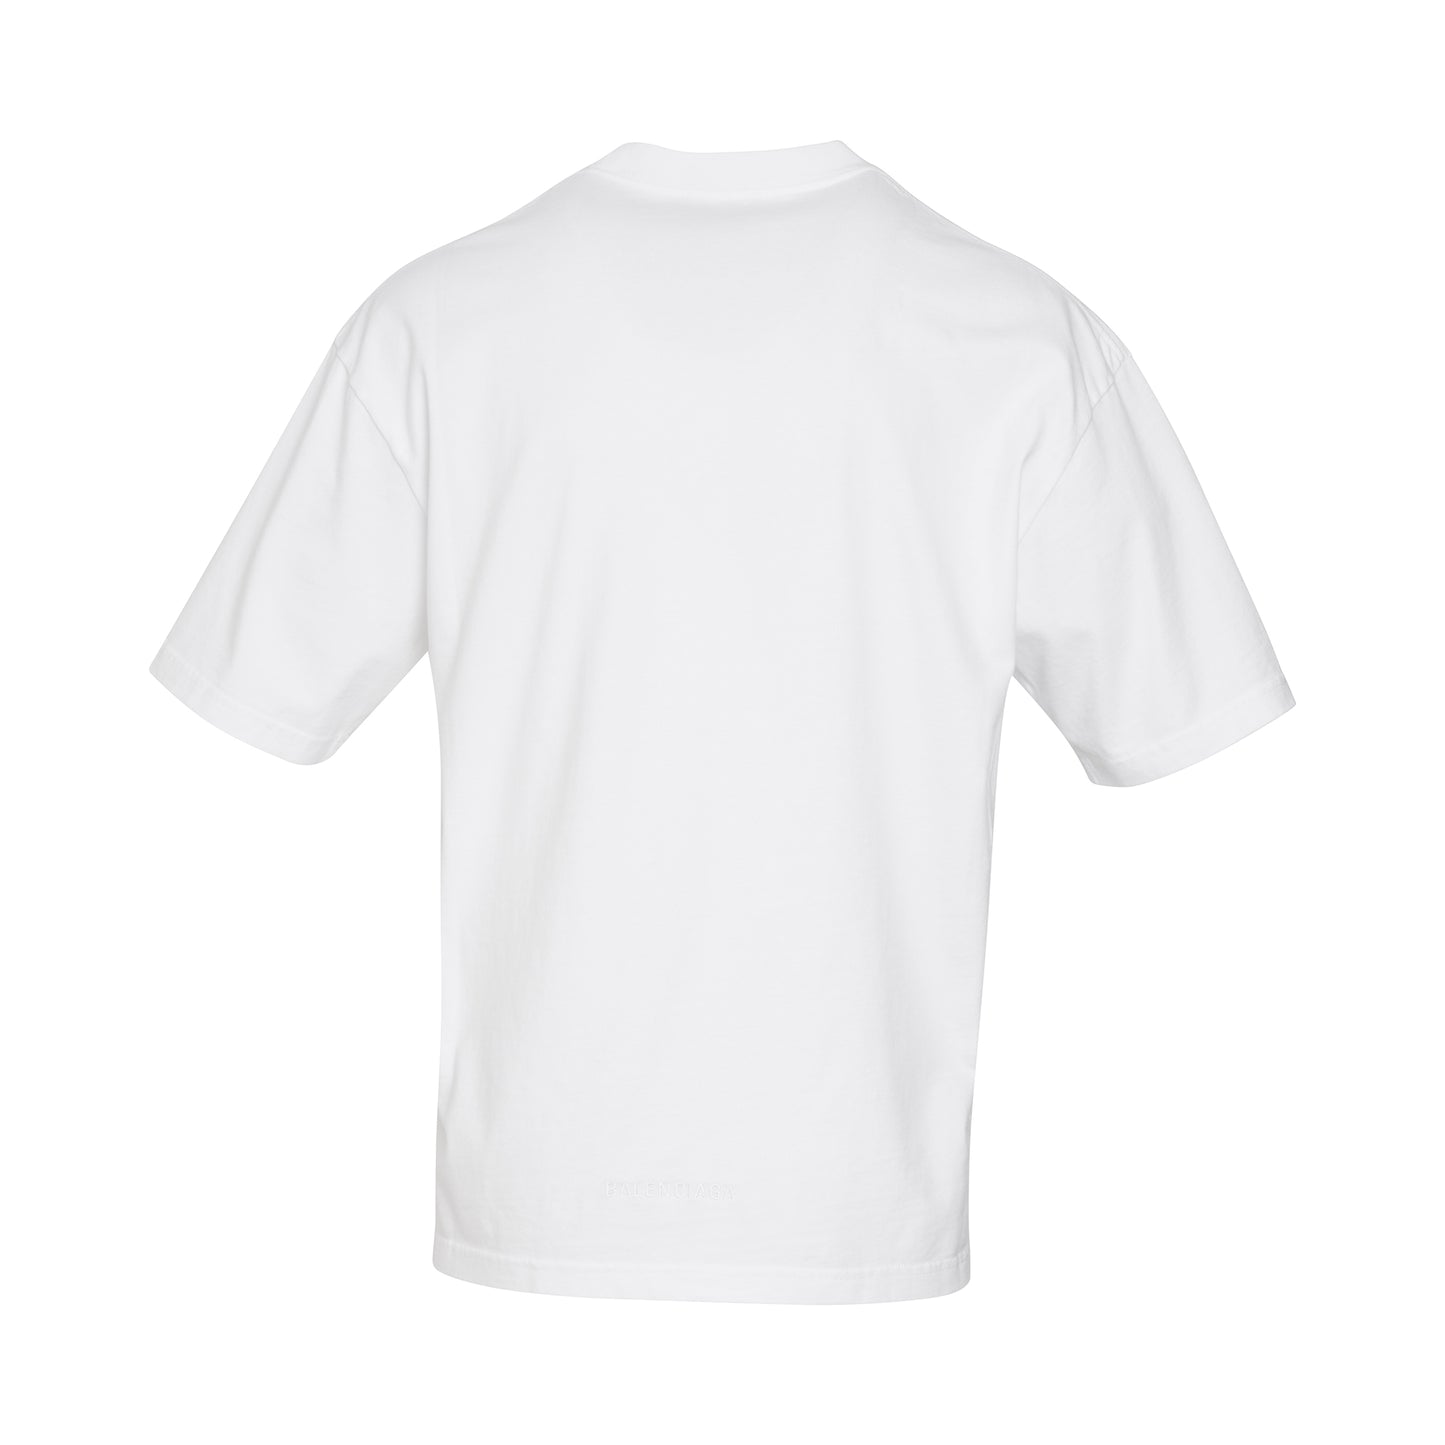 Hulk Medium Fit T-Shirt in White